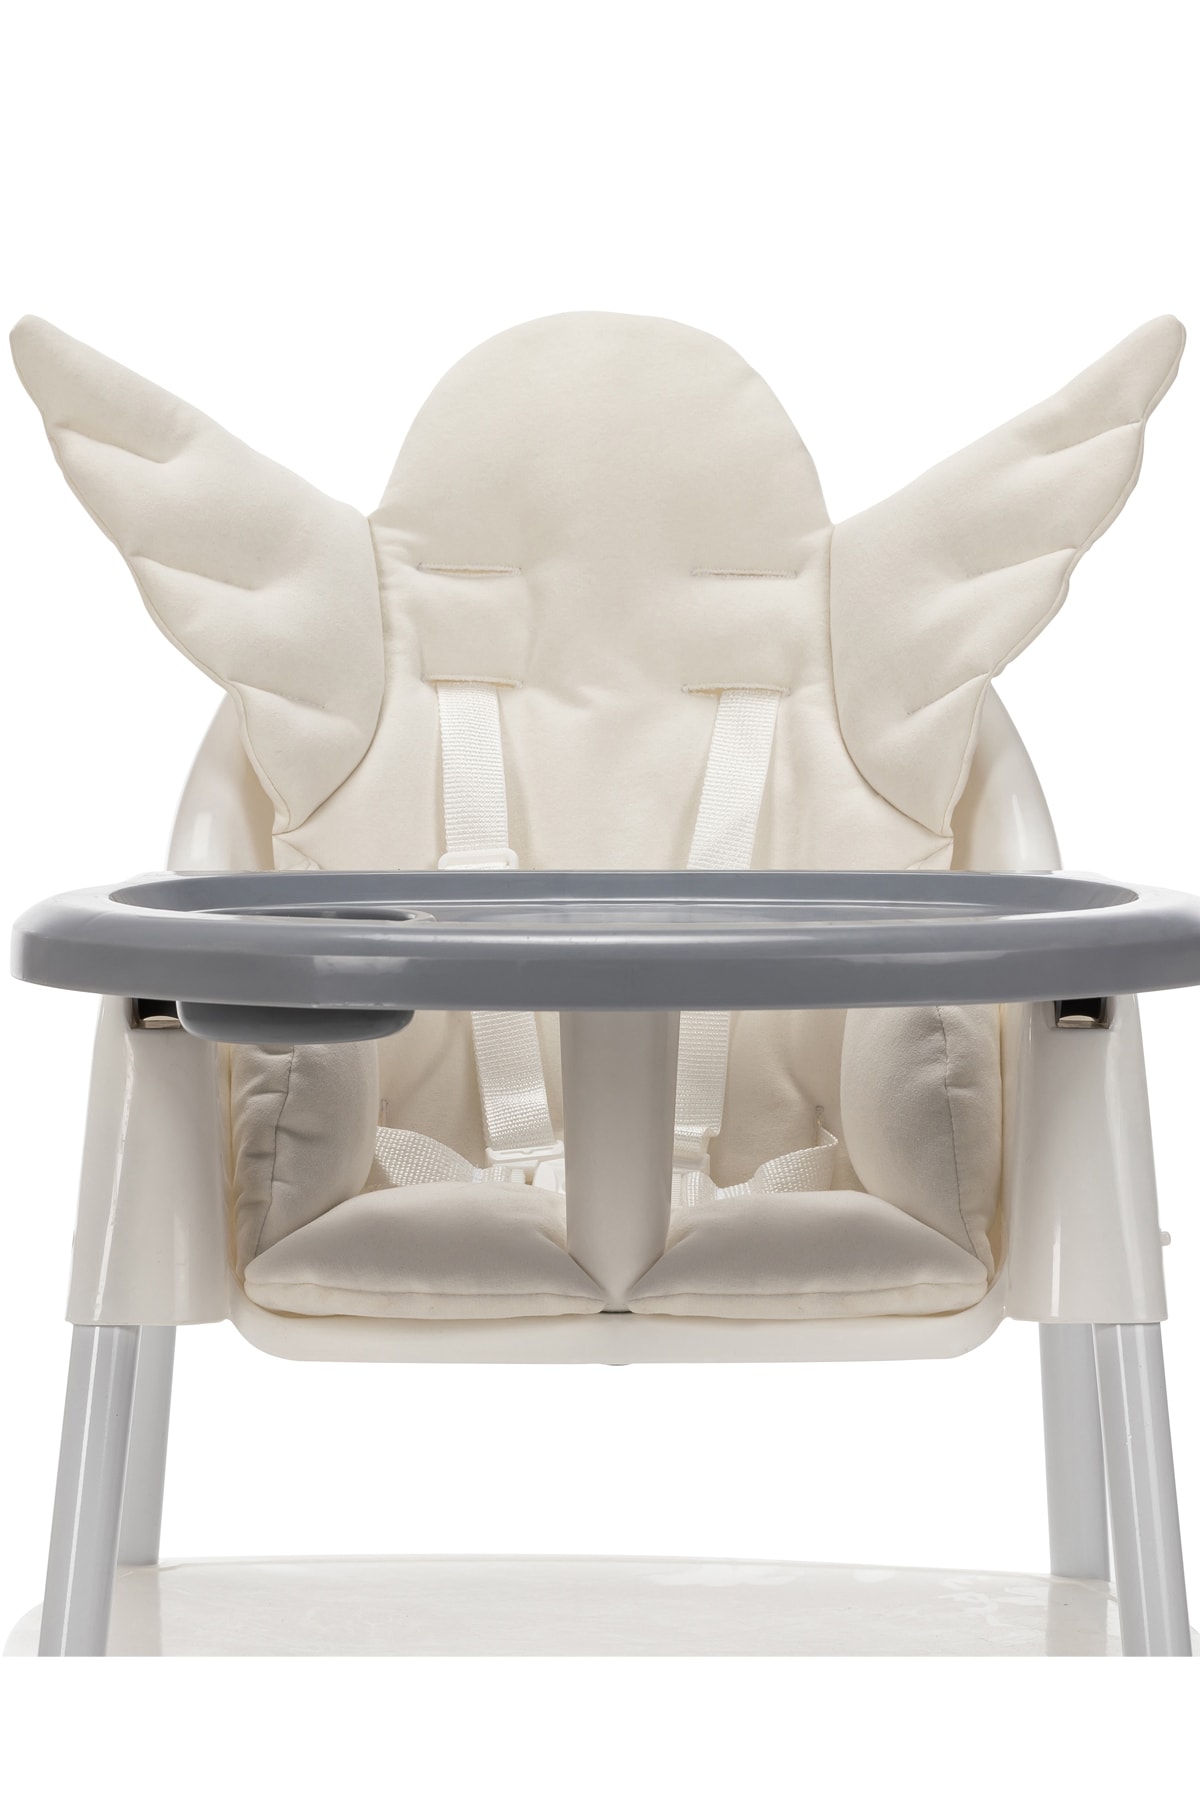 Wellgro Angel Wings Melek Kanatlı Çok Amaçlı Mama Sandalyesi Minderi - Ekru